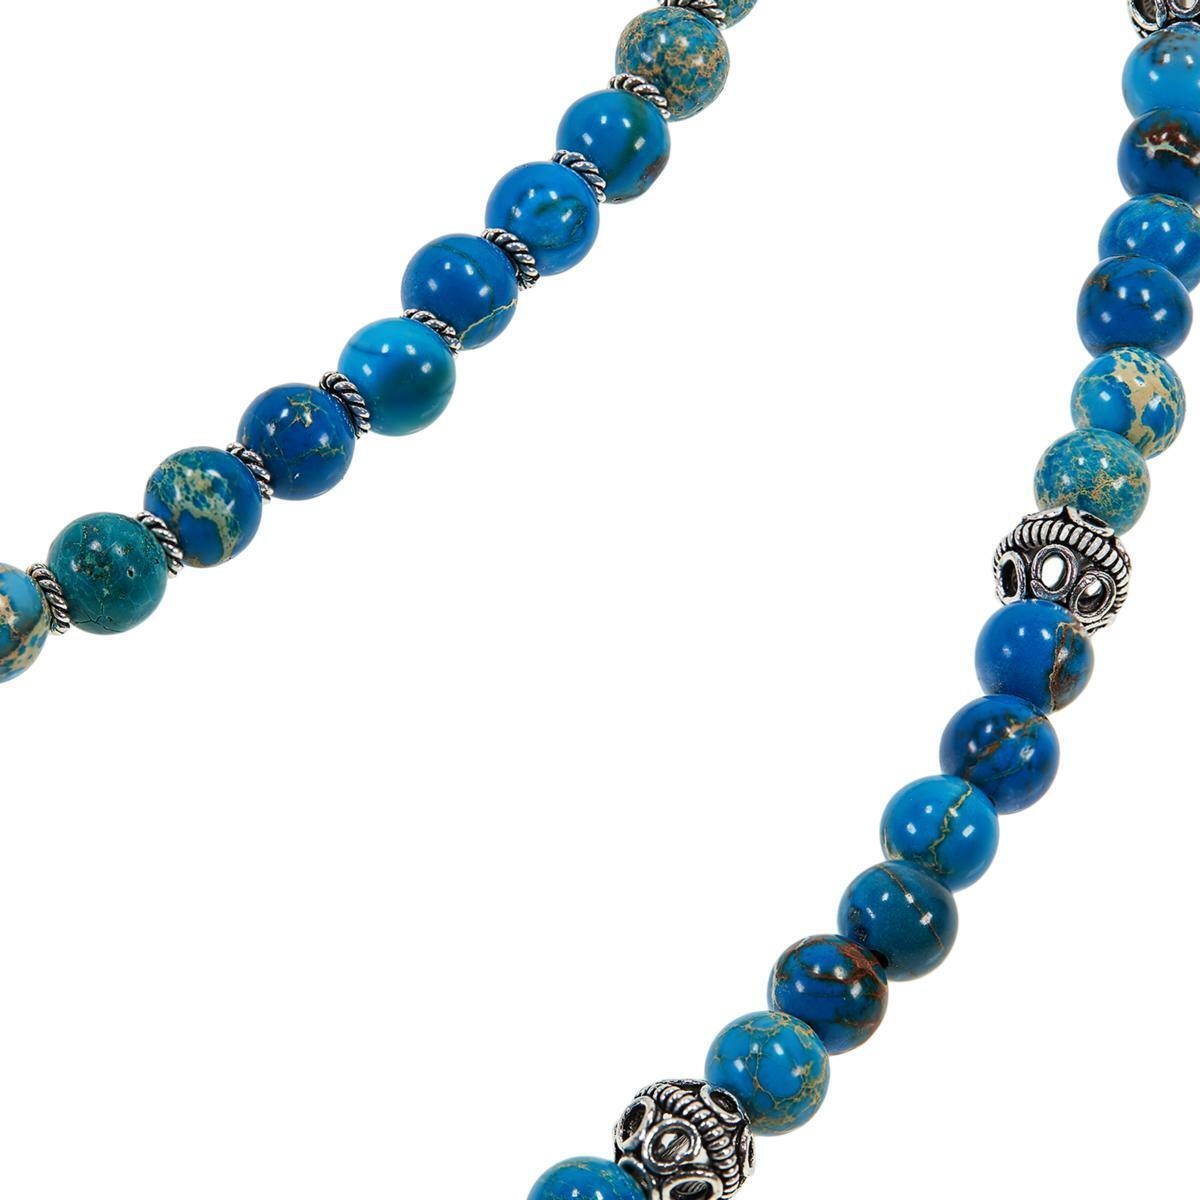 Ottoman Silver Jasper Blue 2-Strand Gemstone Bead Necklace, 19"L x 3/4"W with 3"